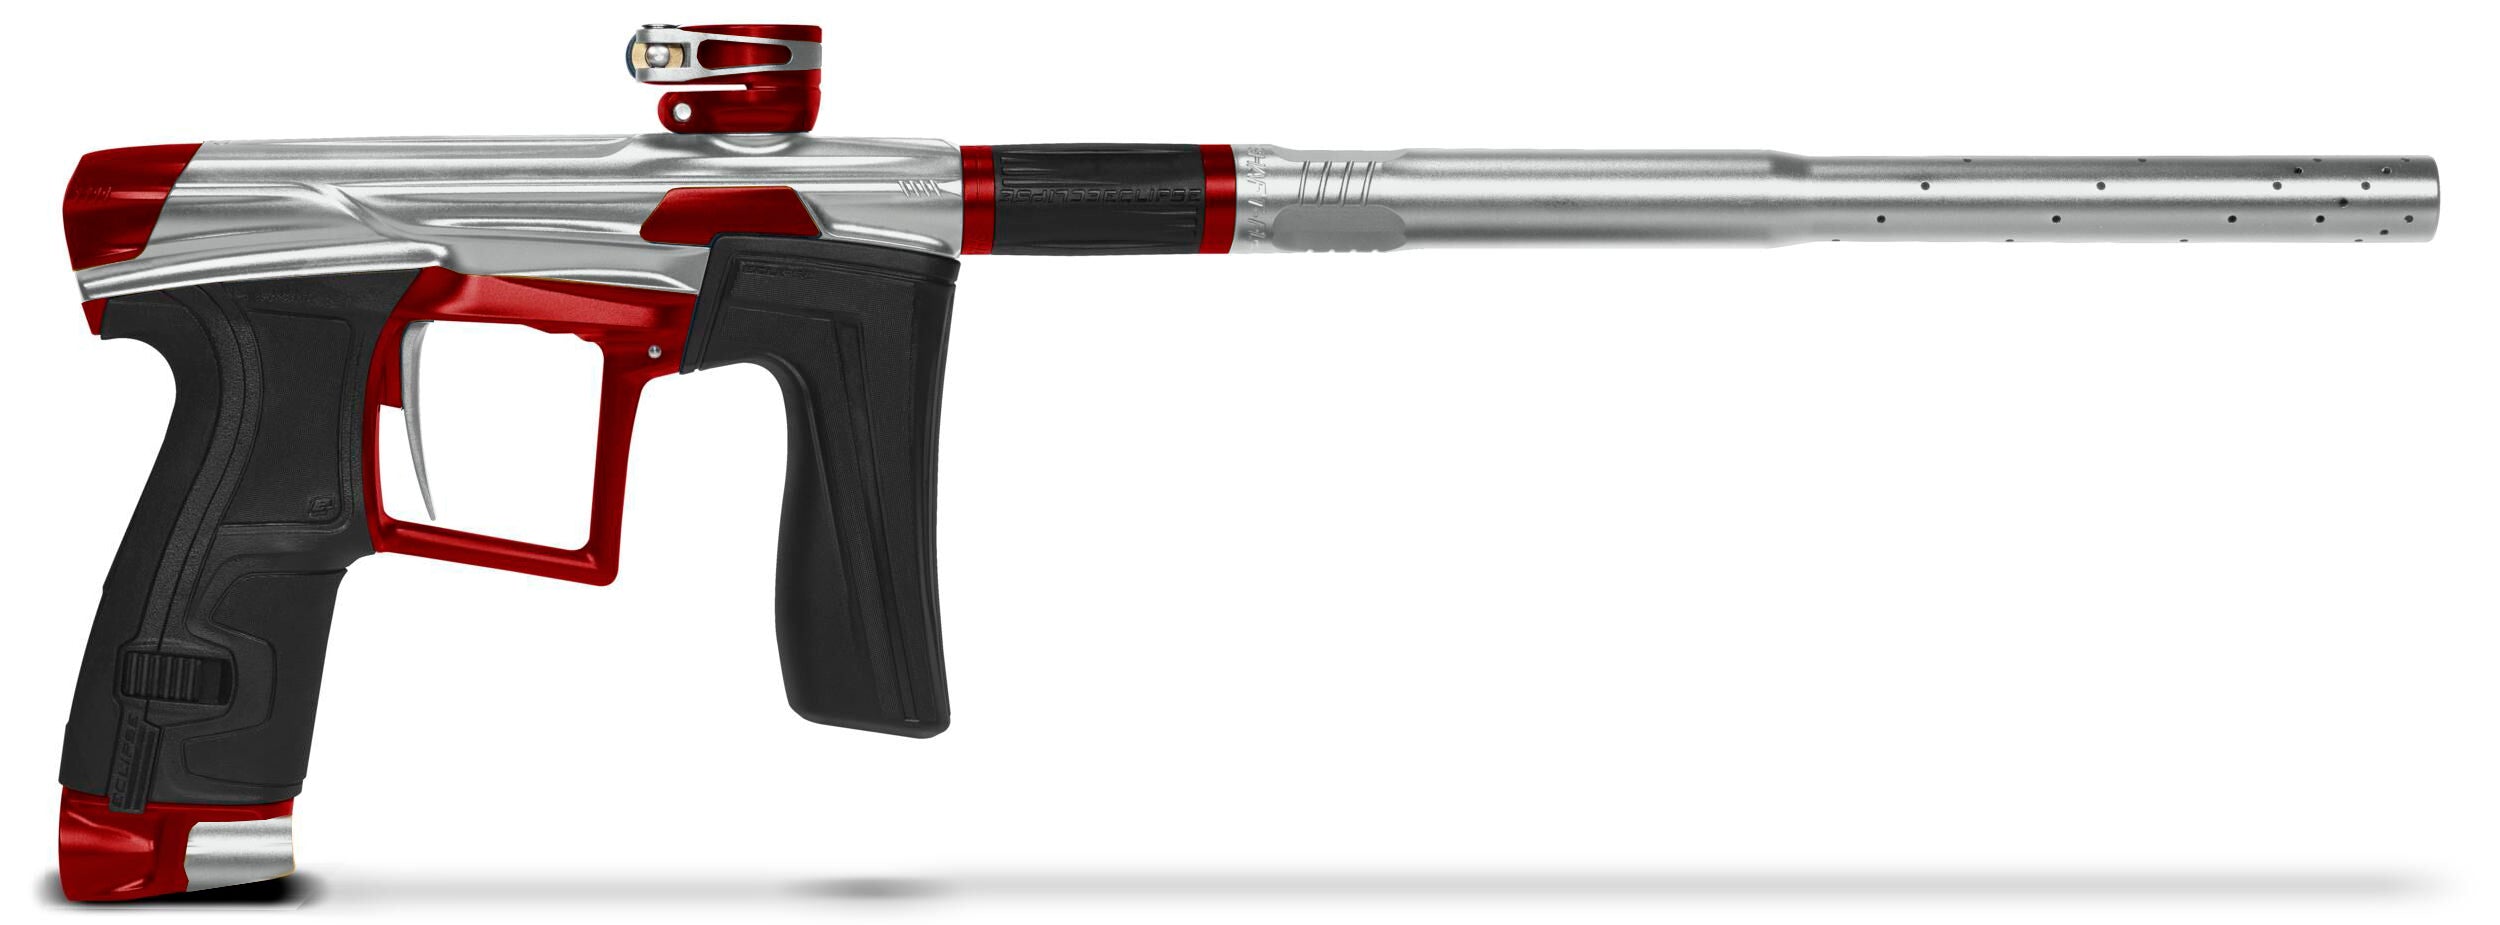 Planet Eclipse Geo 4 Paintball Gun - Silver/Red